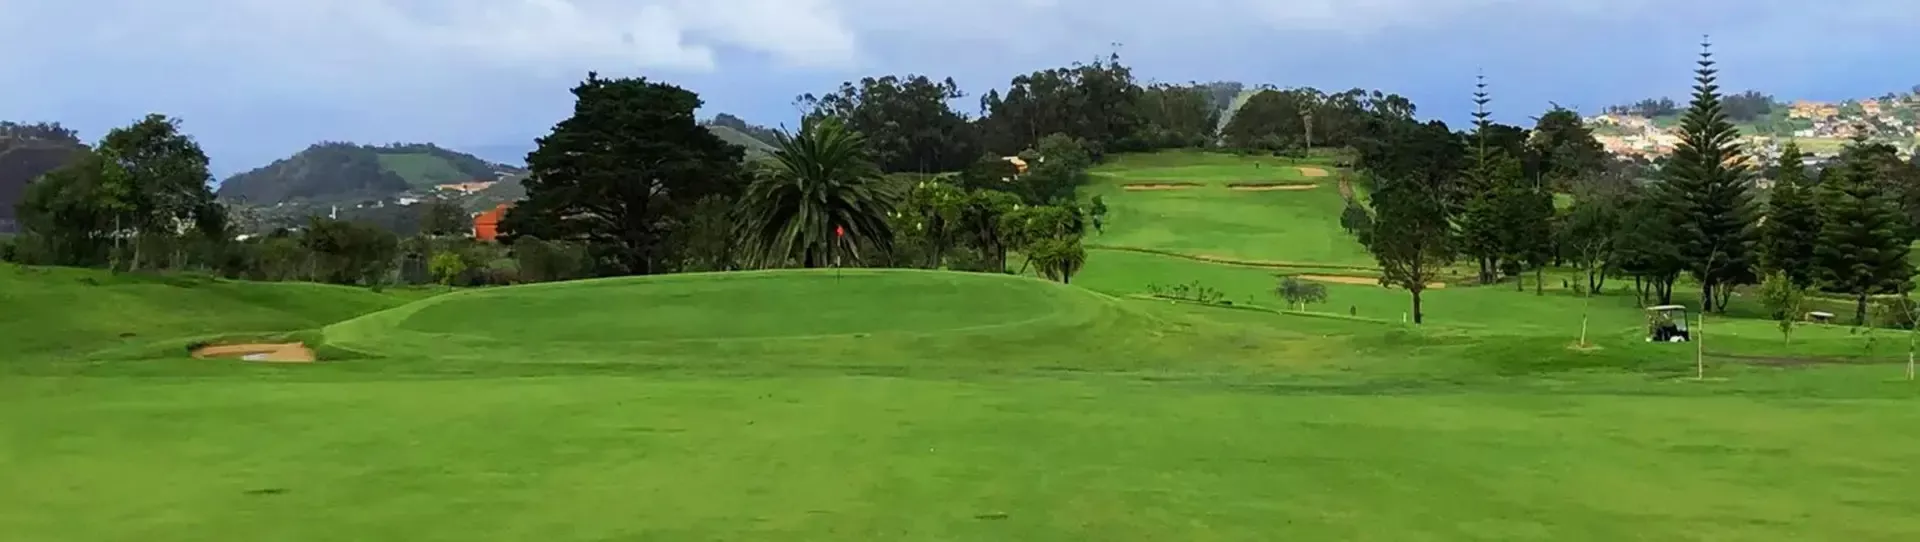 Spain golf courses - Real Club de Golf Tenerife - Photo 2